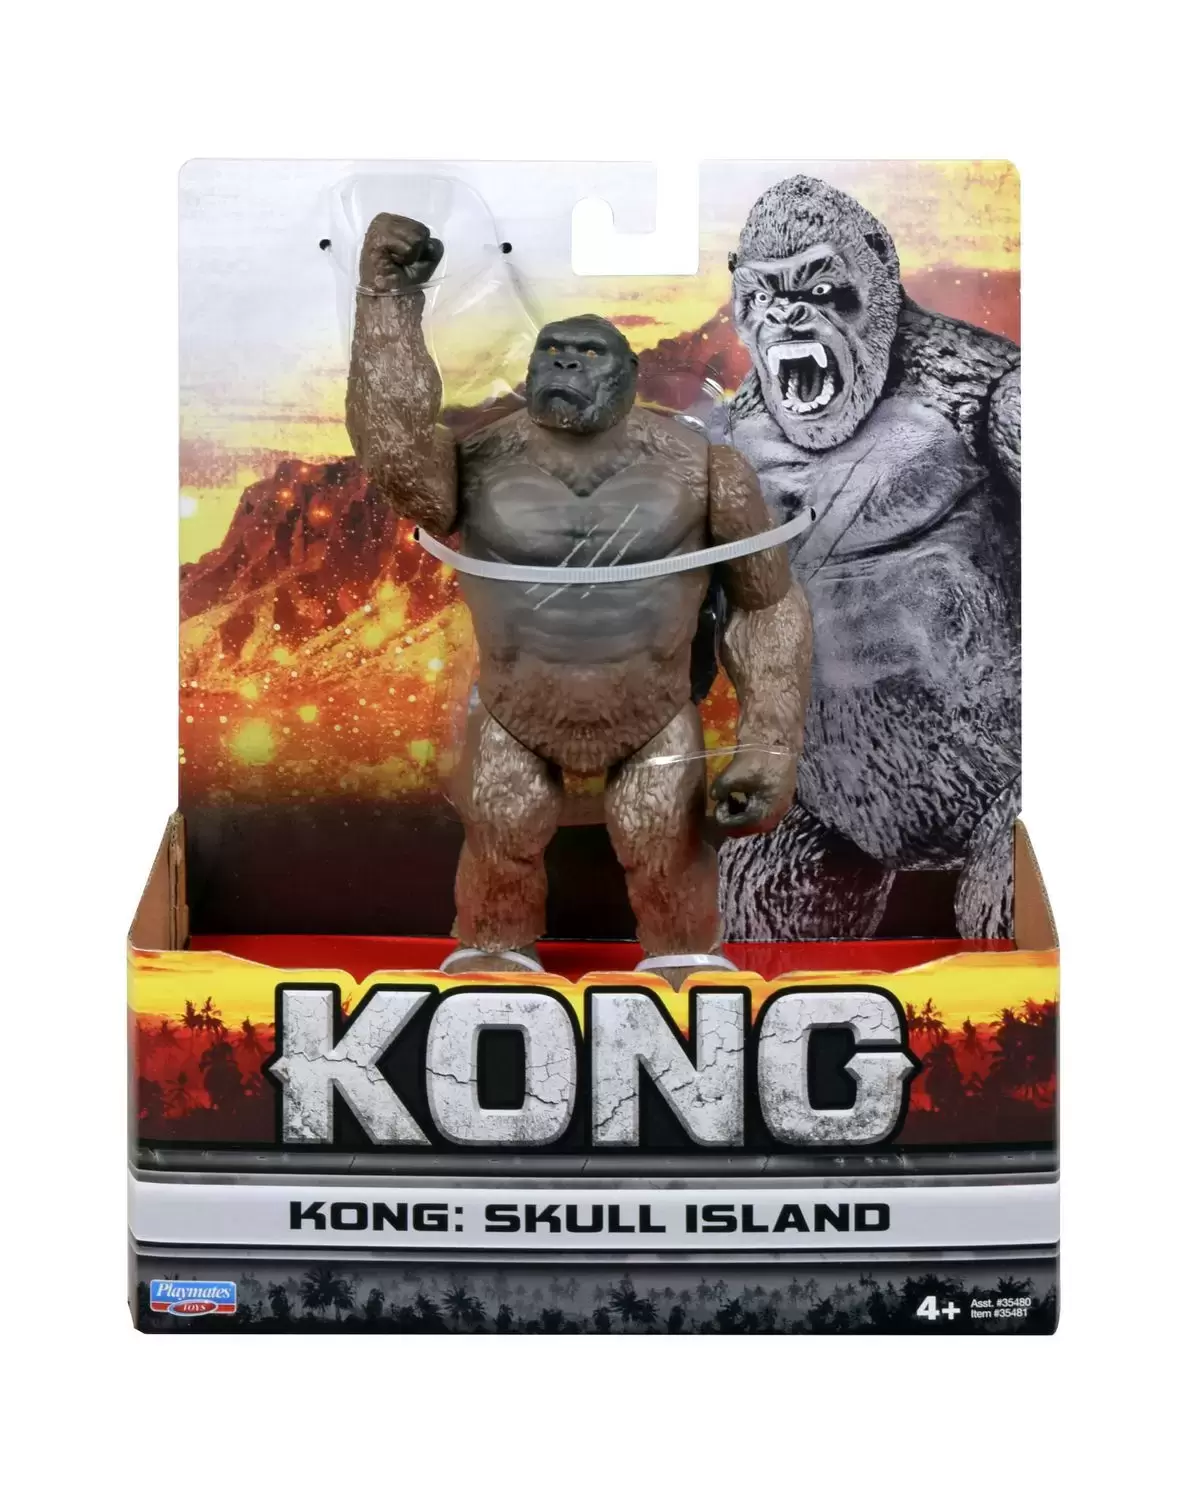 Godzilla and Kong - Kong